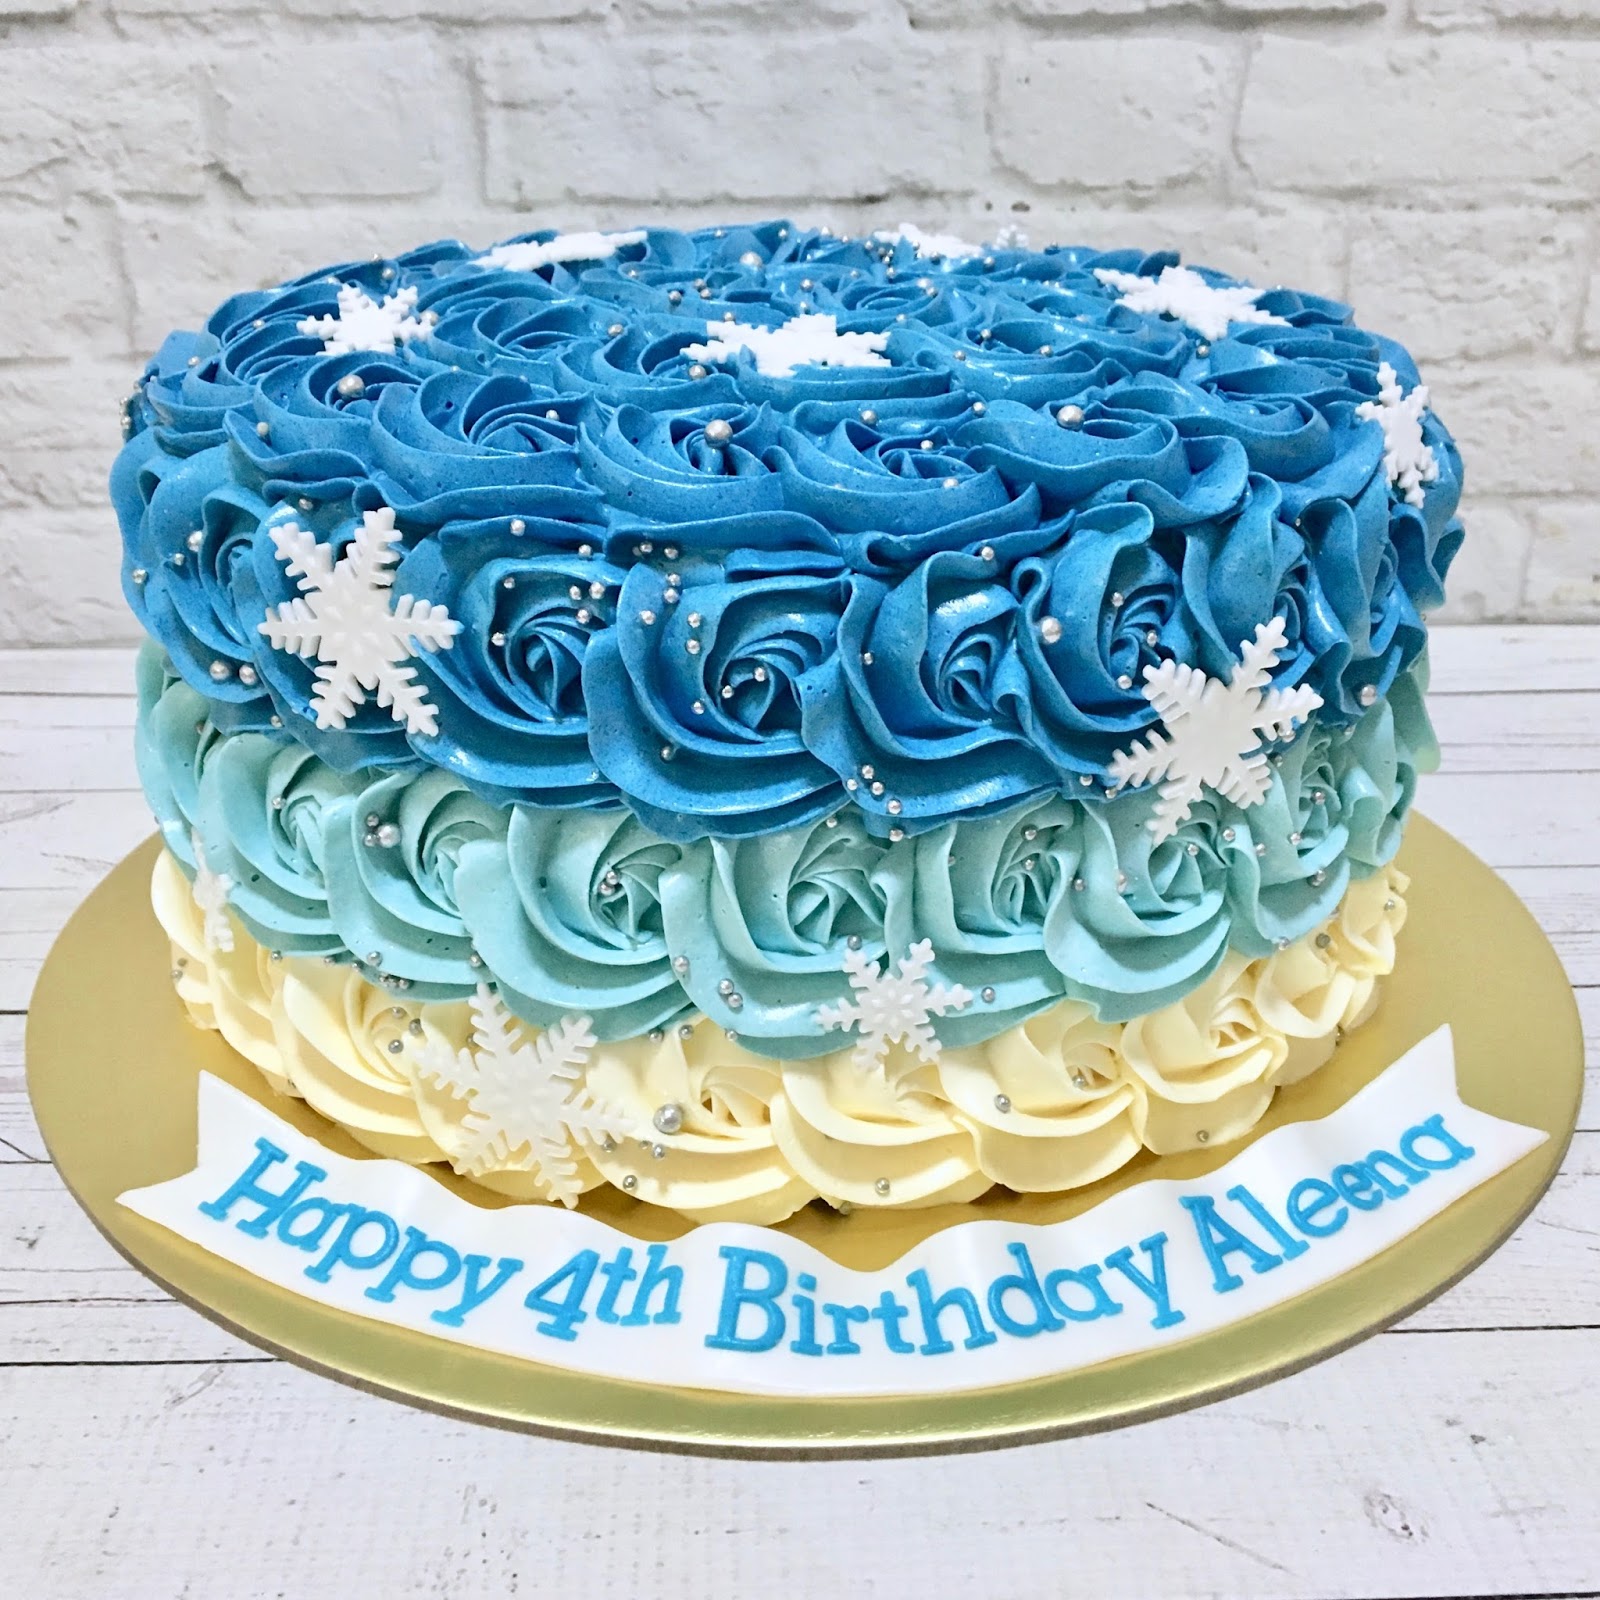 DISNEY FROZEN ELSA BIRTHDAY CAKE EDIBLE ROUND PRINTED CAKE TOPPER DECORATION